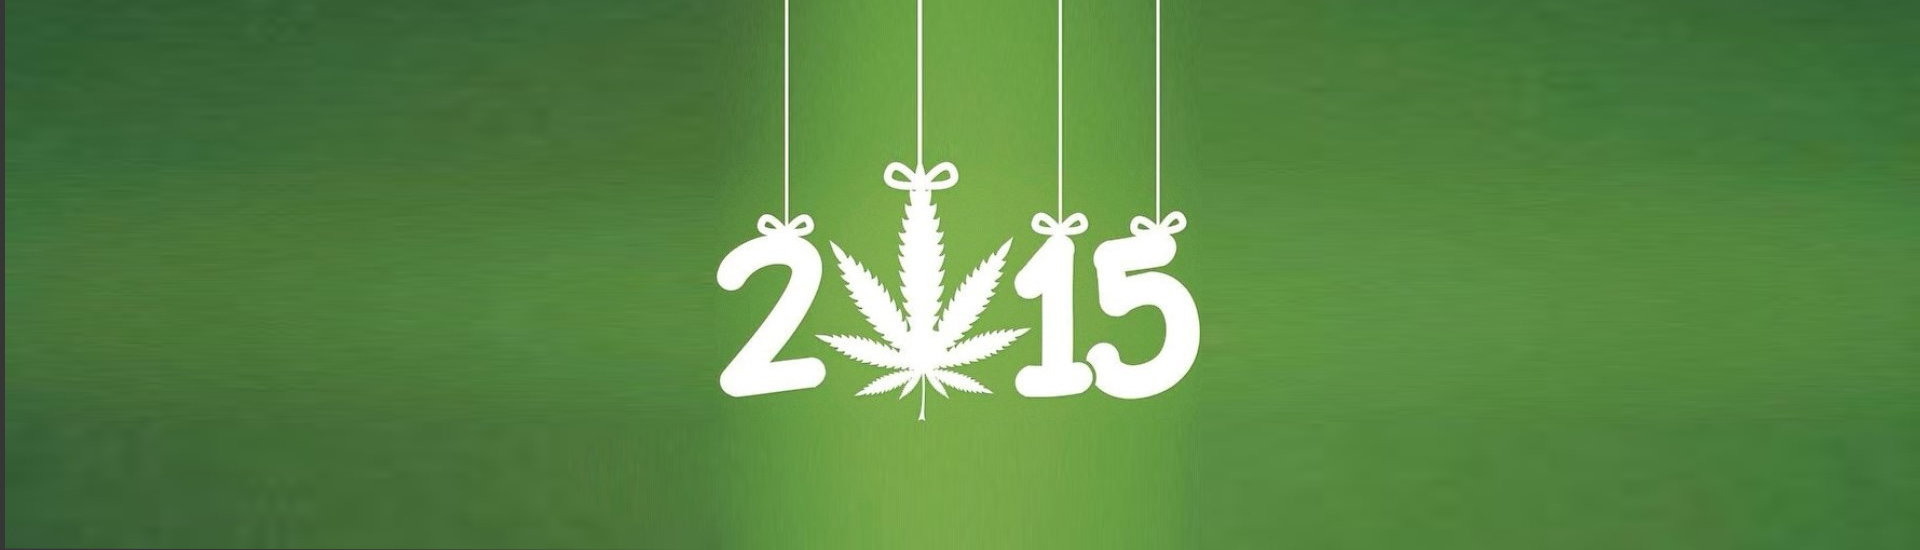 2015, année du cannabis